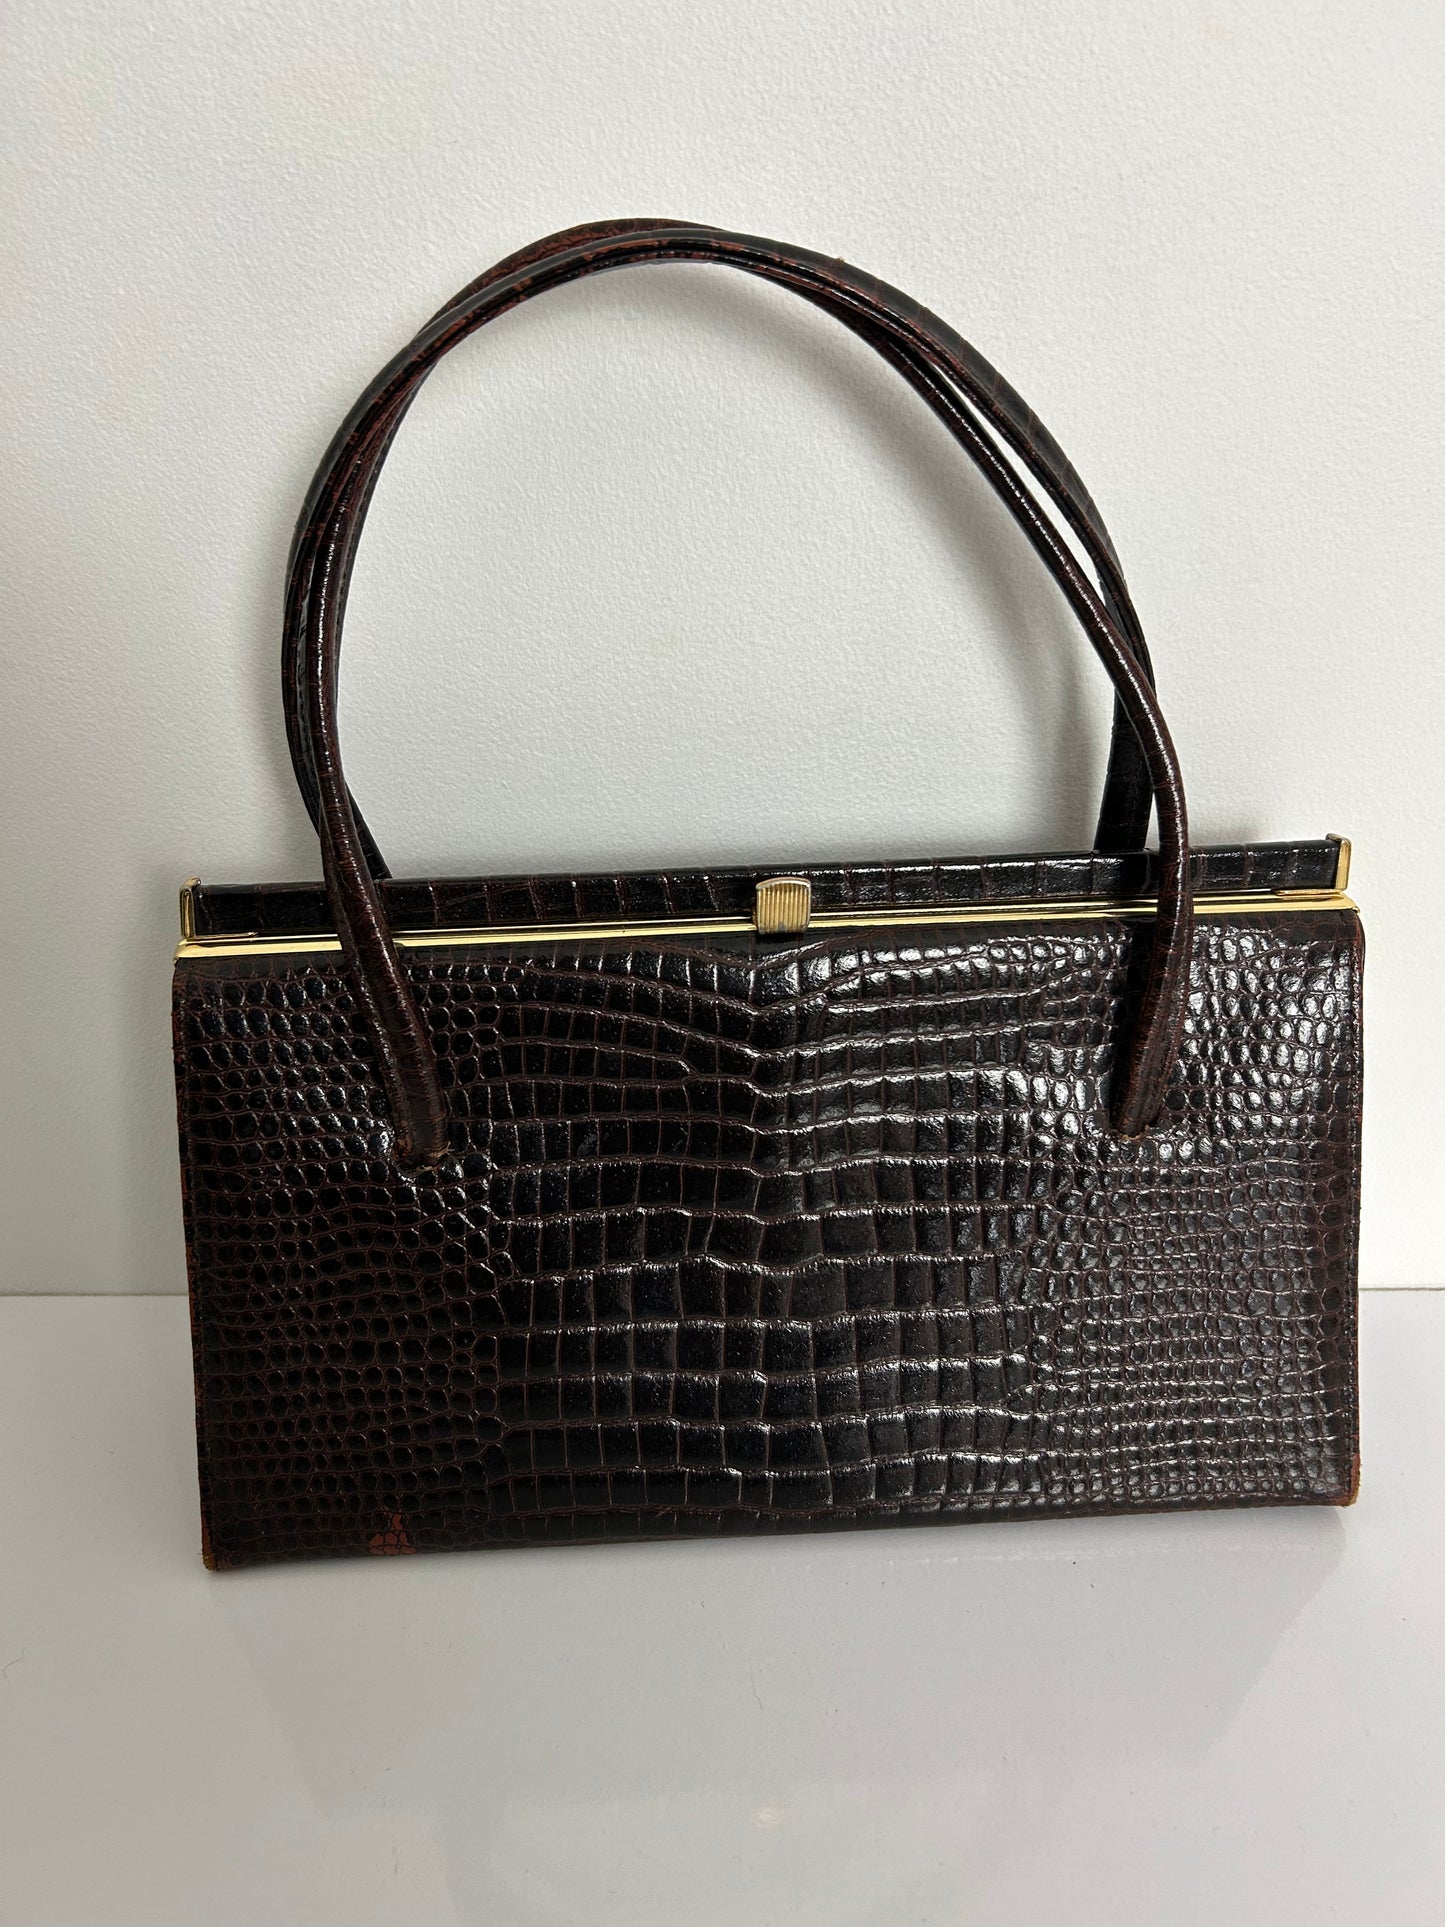 Vintage 1950s Chocolate Brown Mock Reptile Leather Kelly Bag Handbag